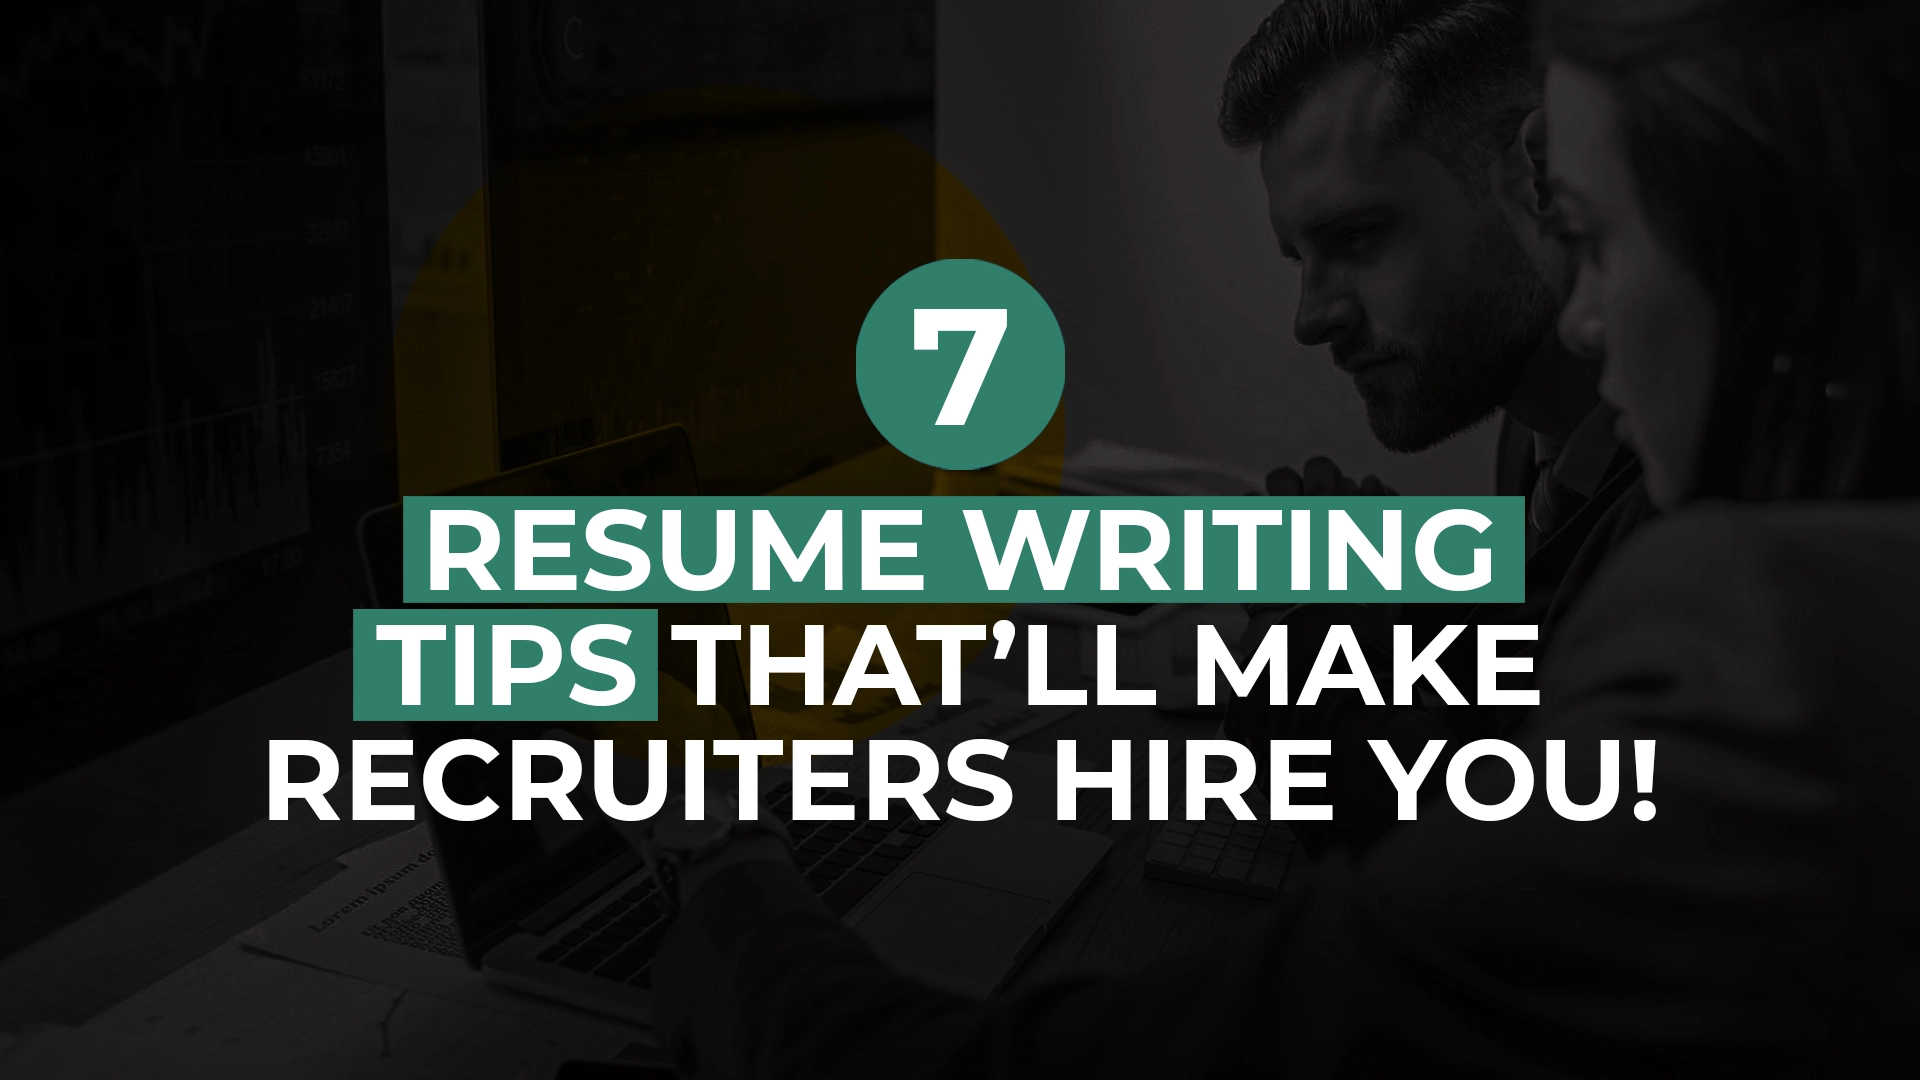 7 Resume Writing Tips